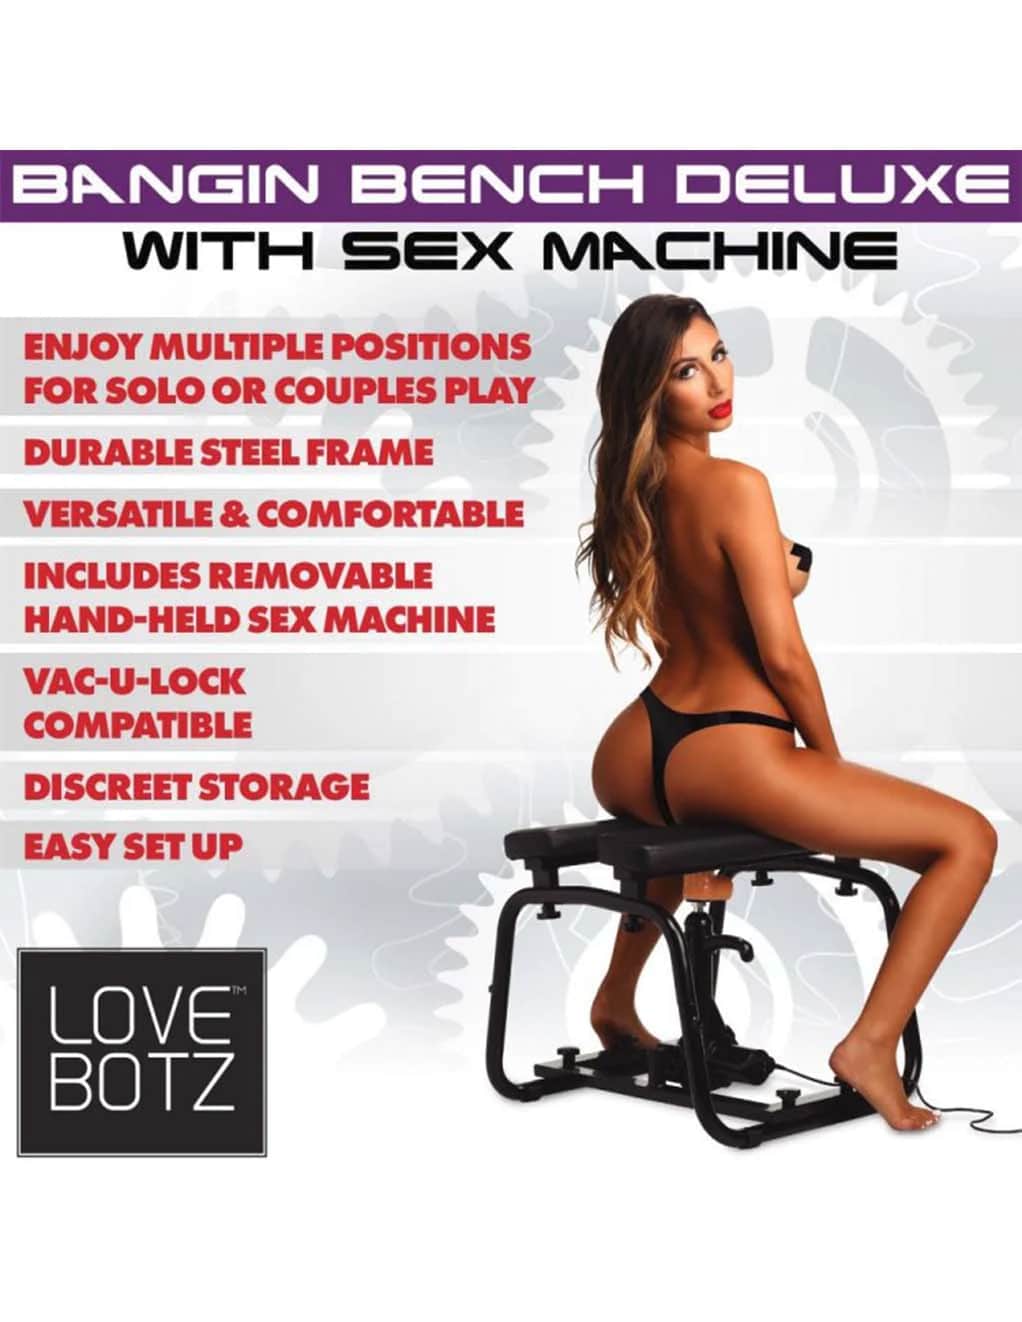 LoveBotz Deluxe Bangin' Bench. Slide 3